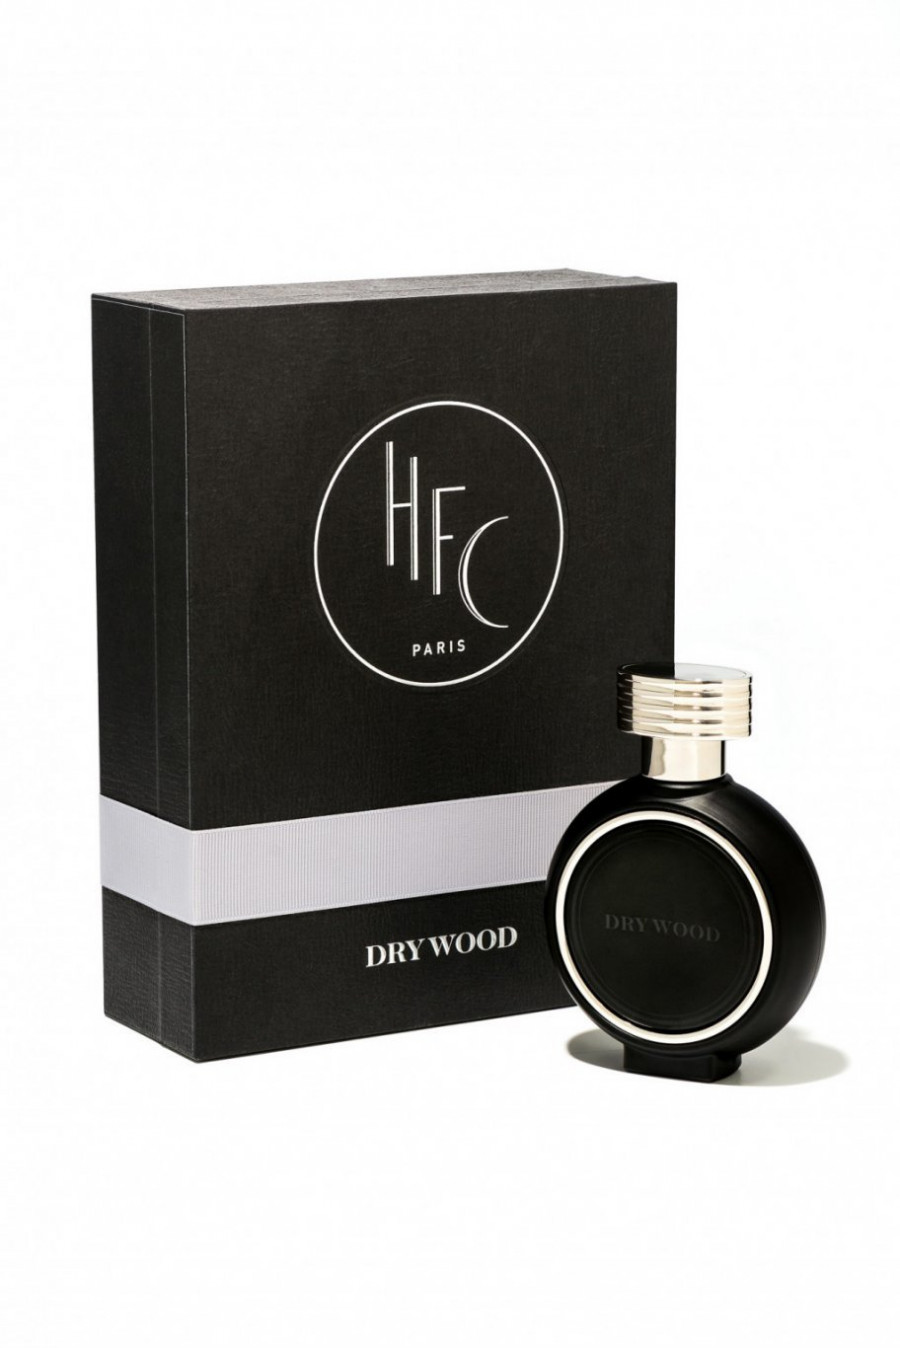 Haute Fragrance Company - Dry Wood